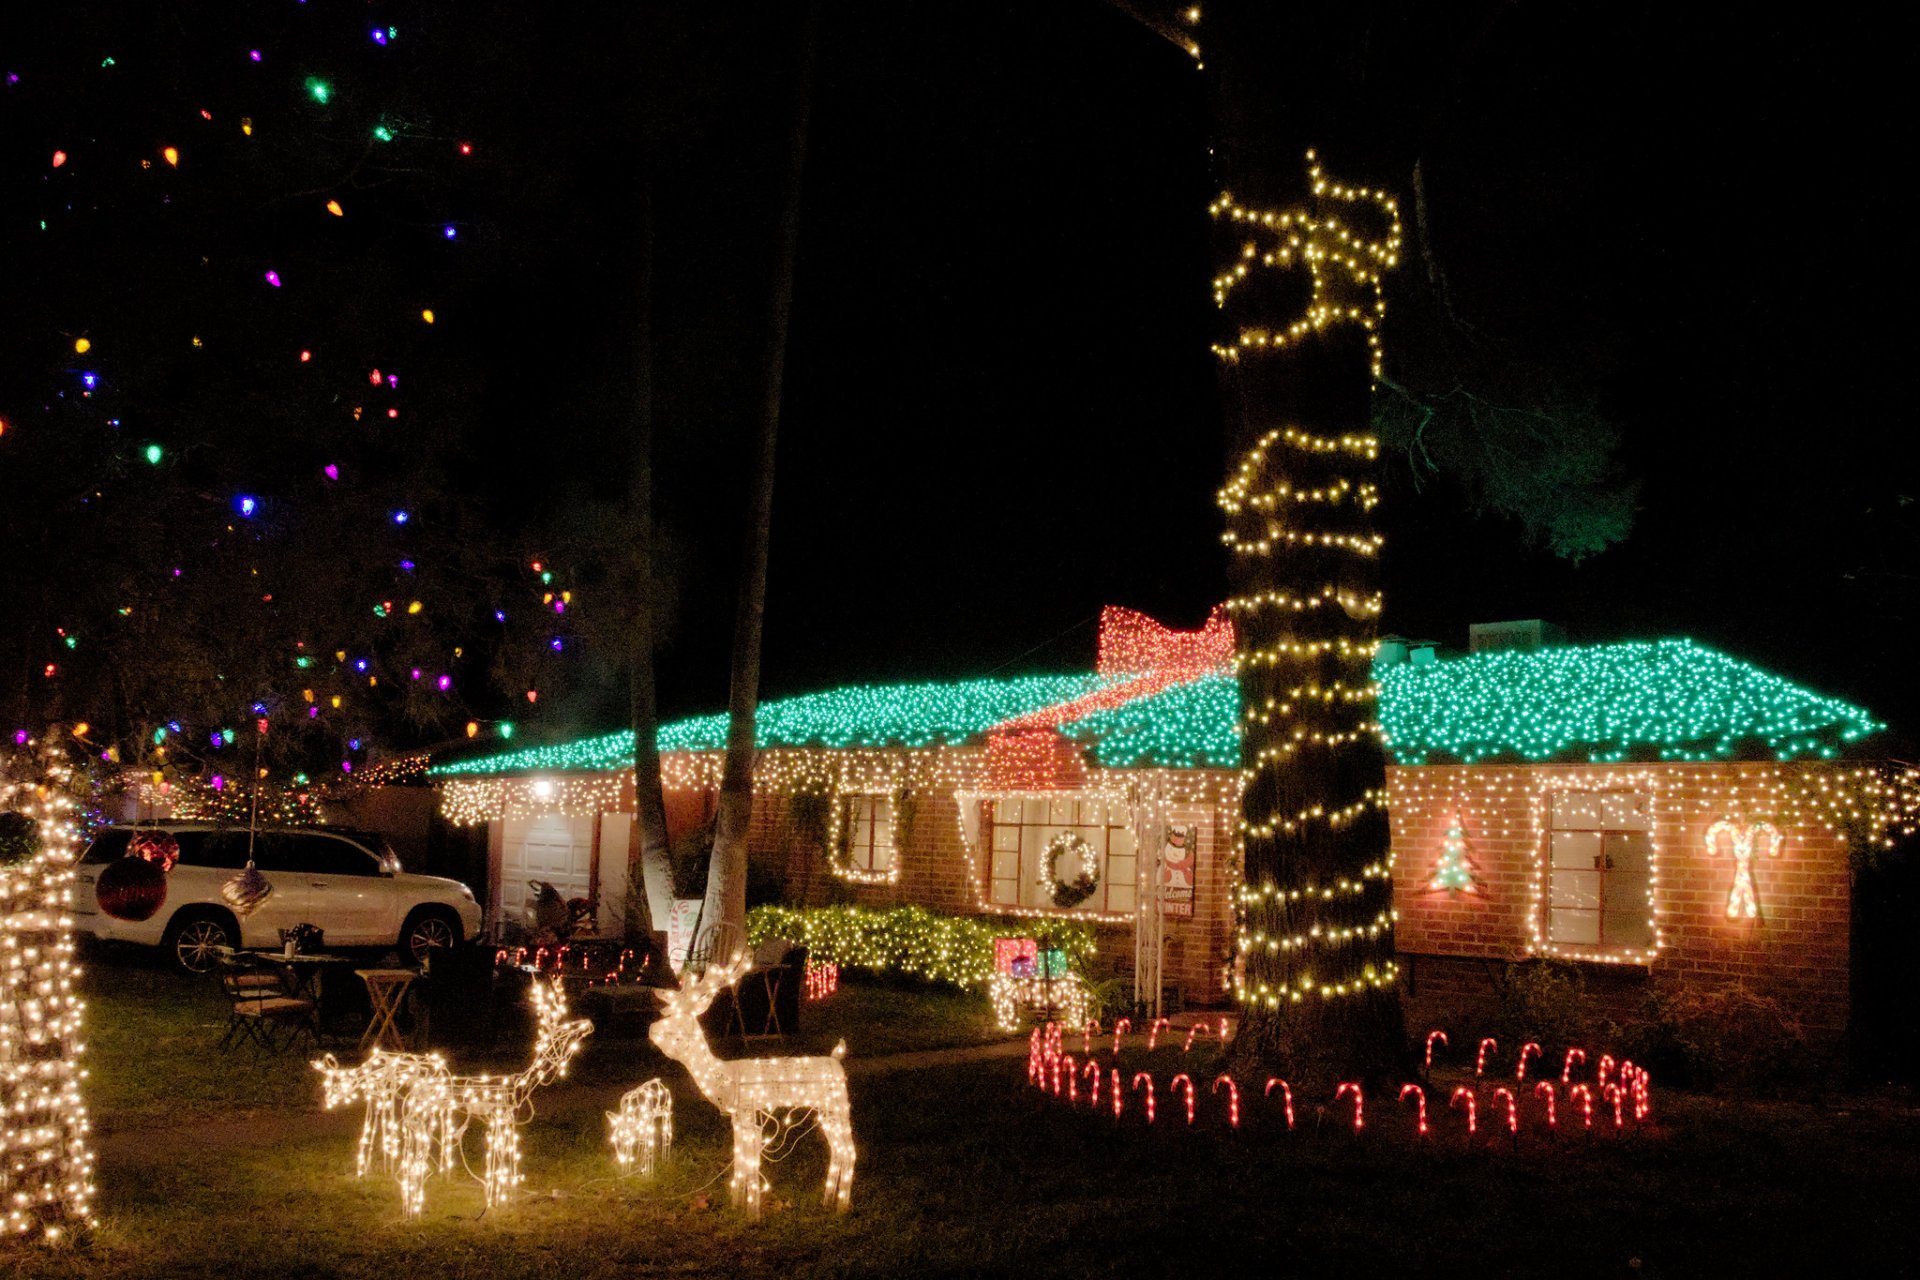 Tucson Christmas Lights 20222023 in Tucson, AZ Dates